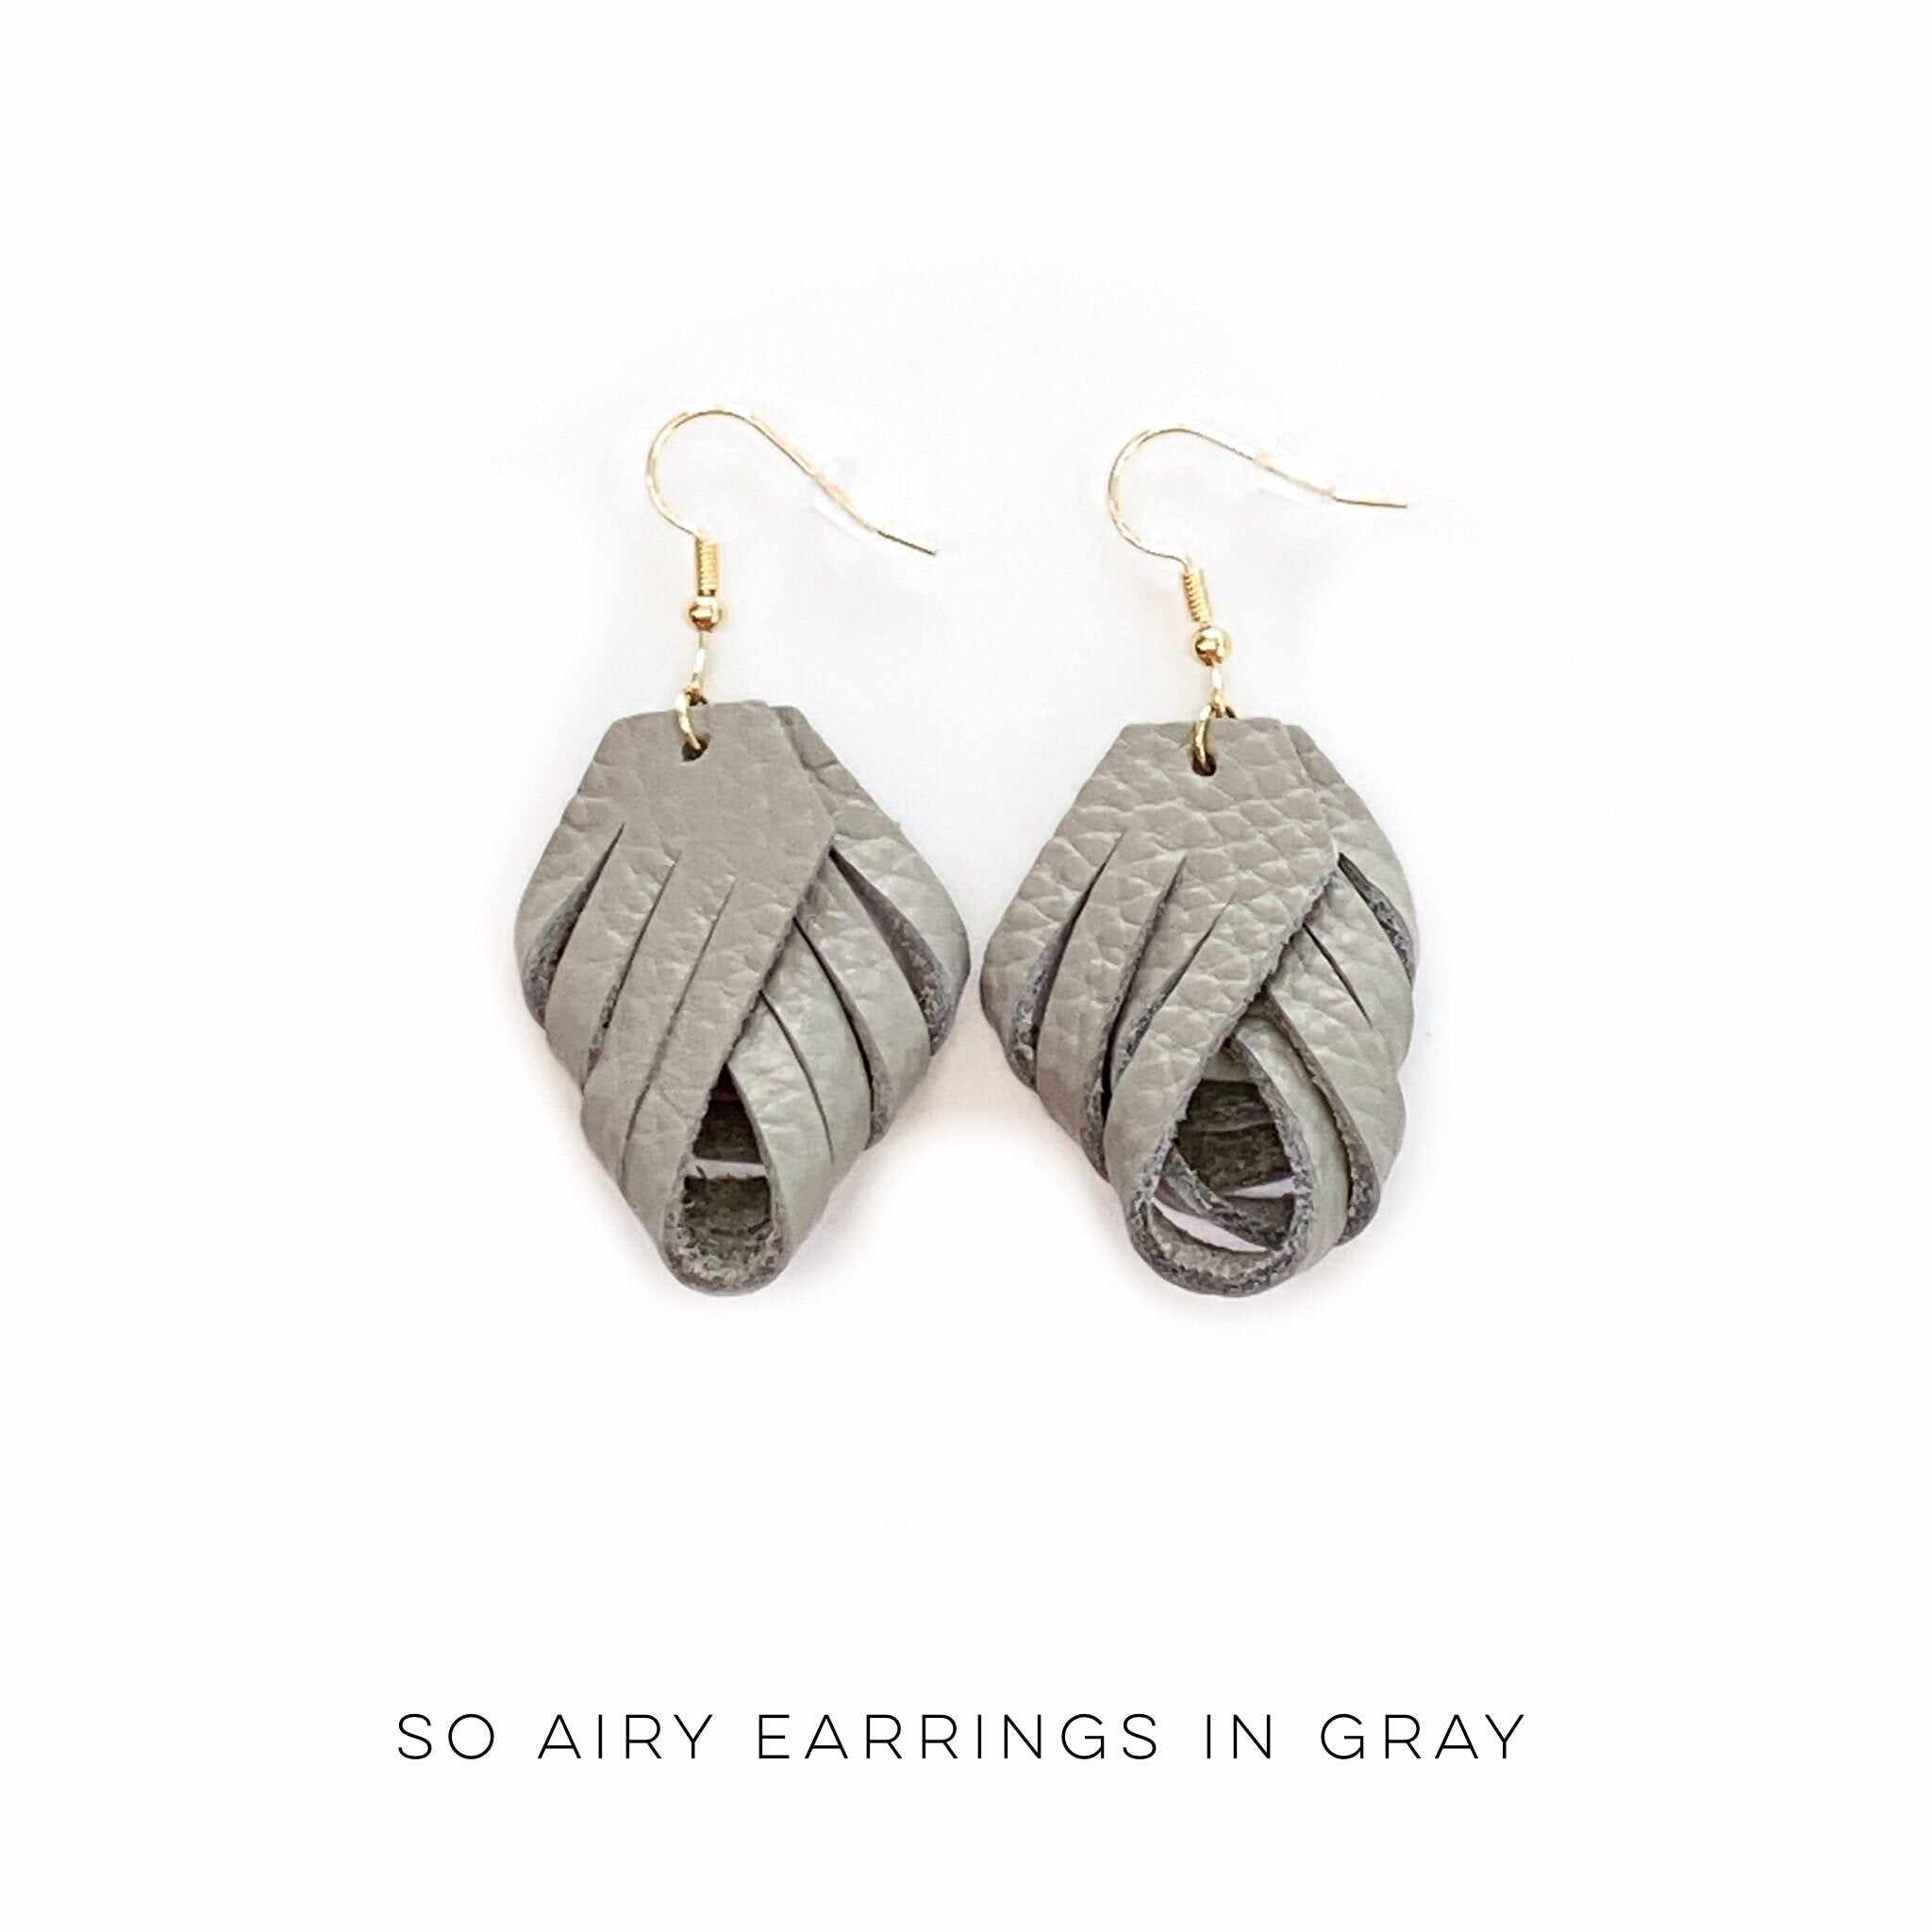 So Airy Earrings in Gray